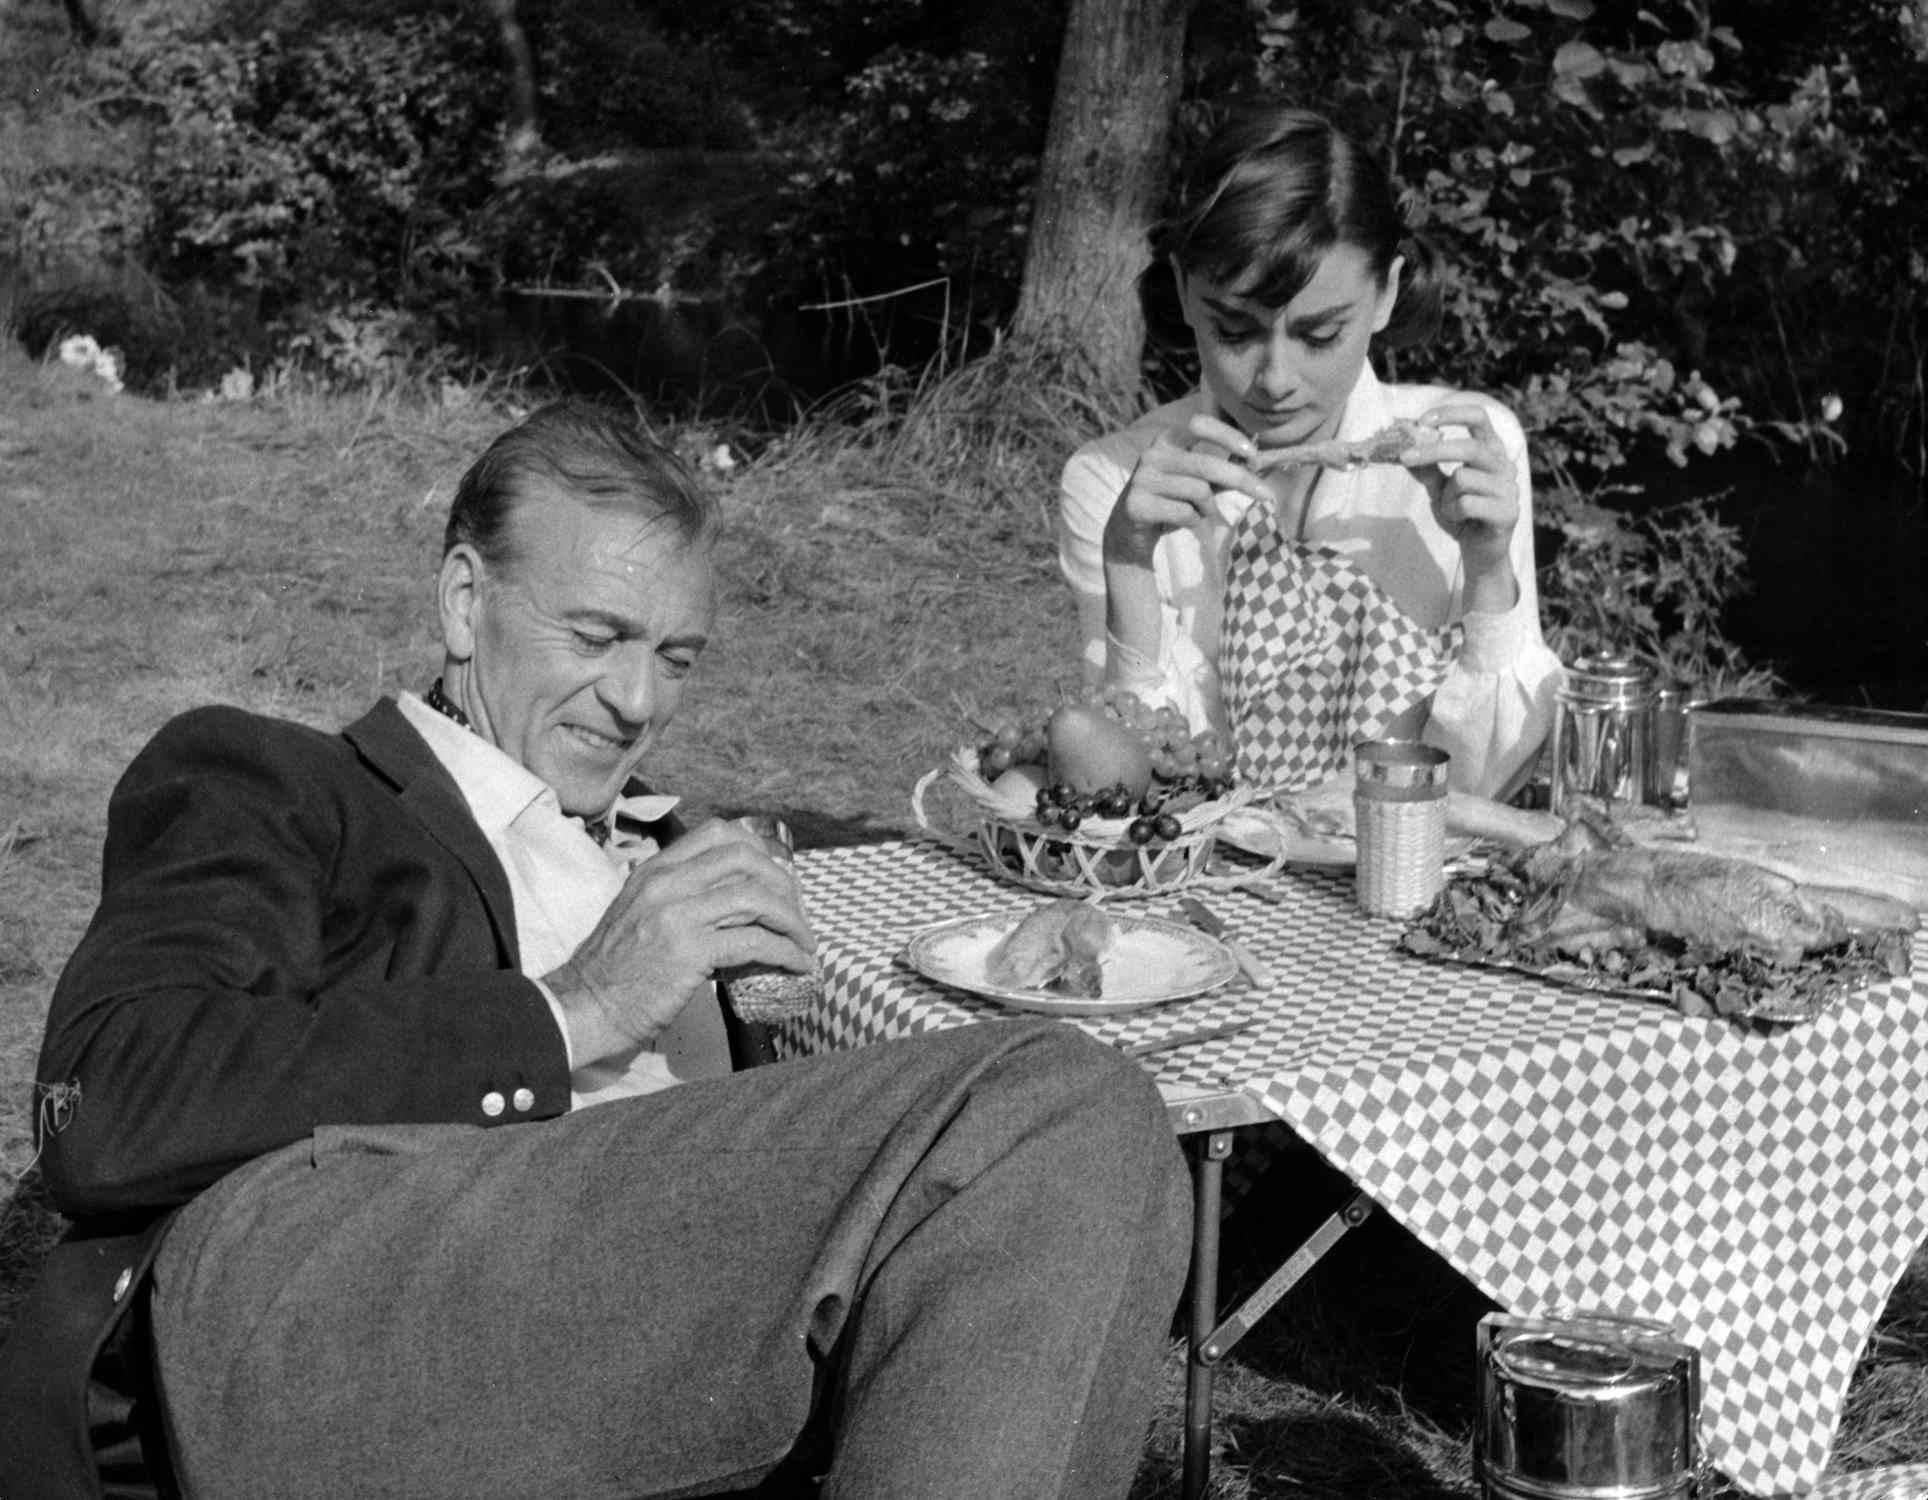 Unknown Portrait Photograph - Audrey Hepburn and Gary Cooper Having a Picnic Fine Art Print